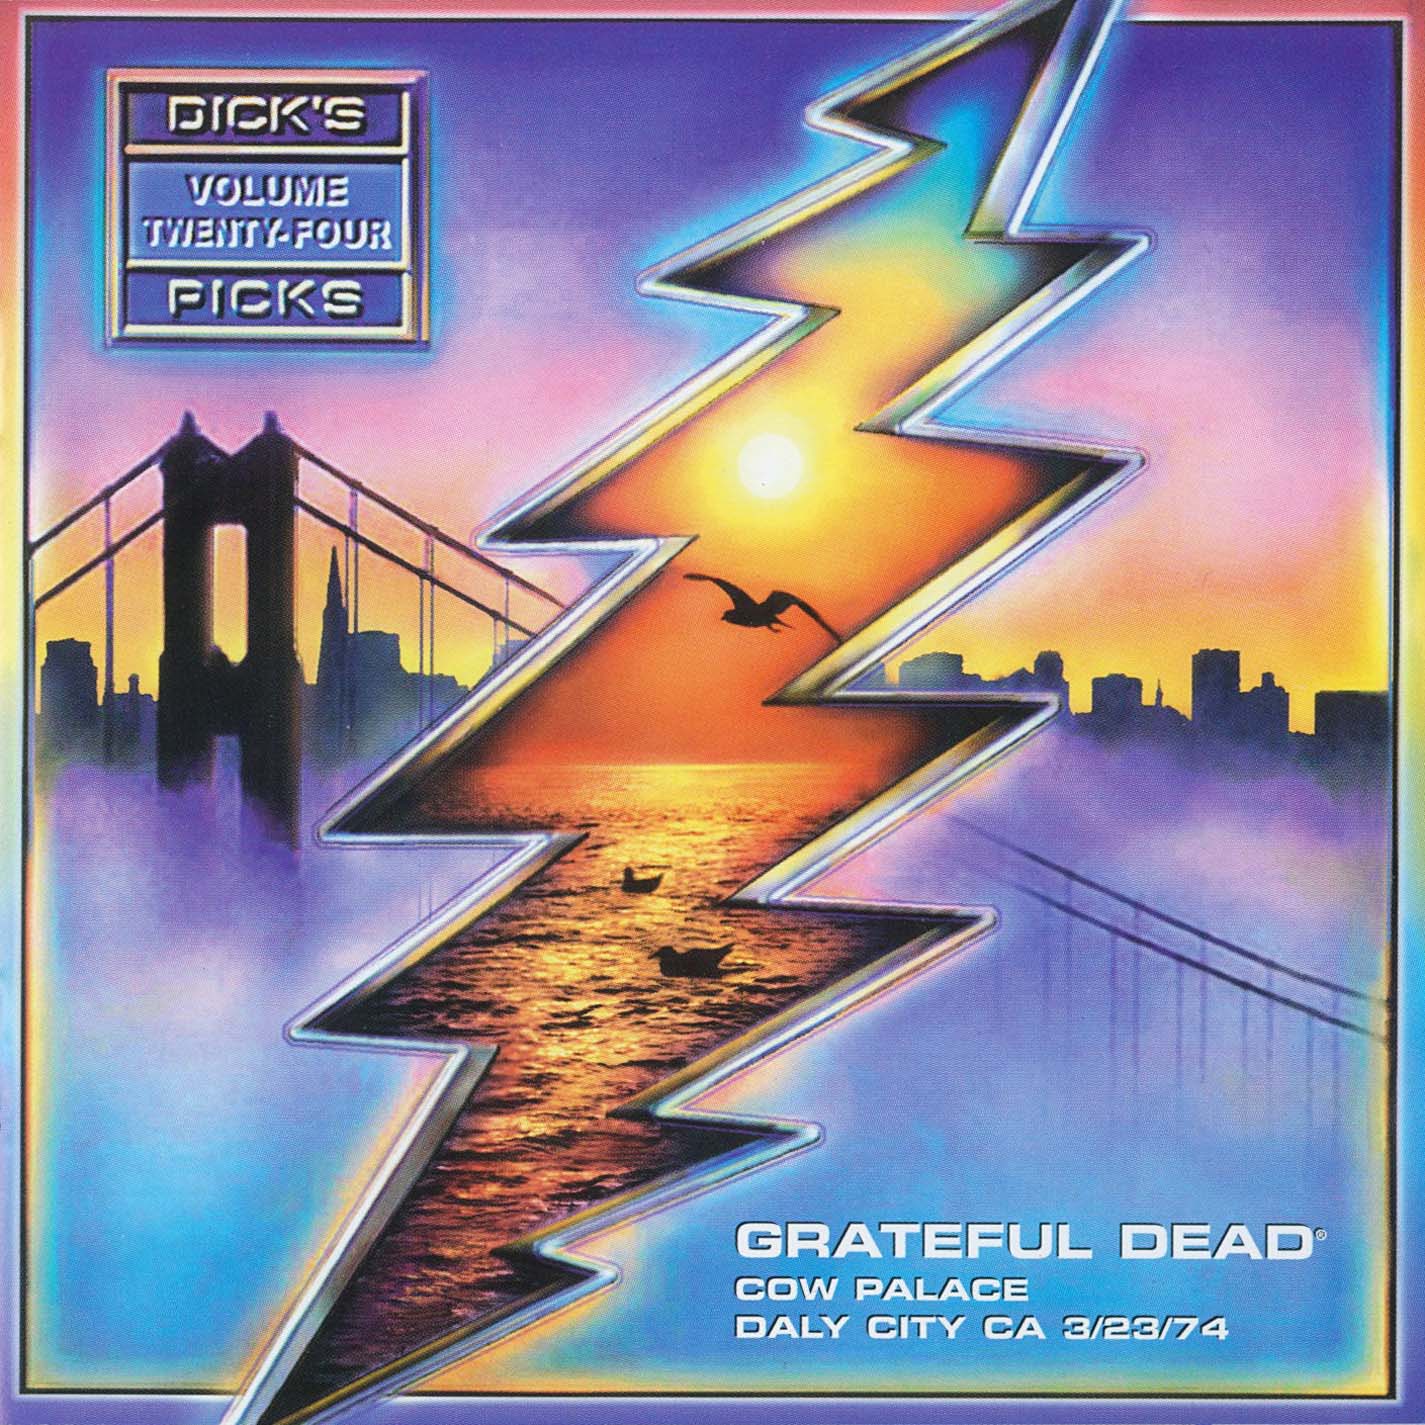 Grateful Dead Dick's Picks 24 album cover artwork